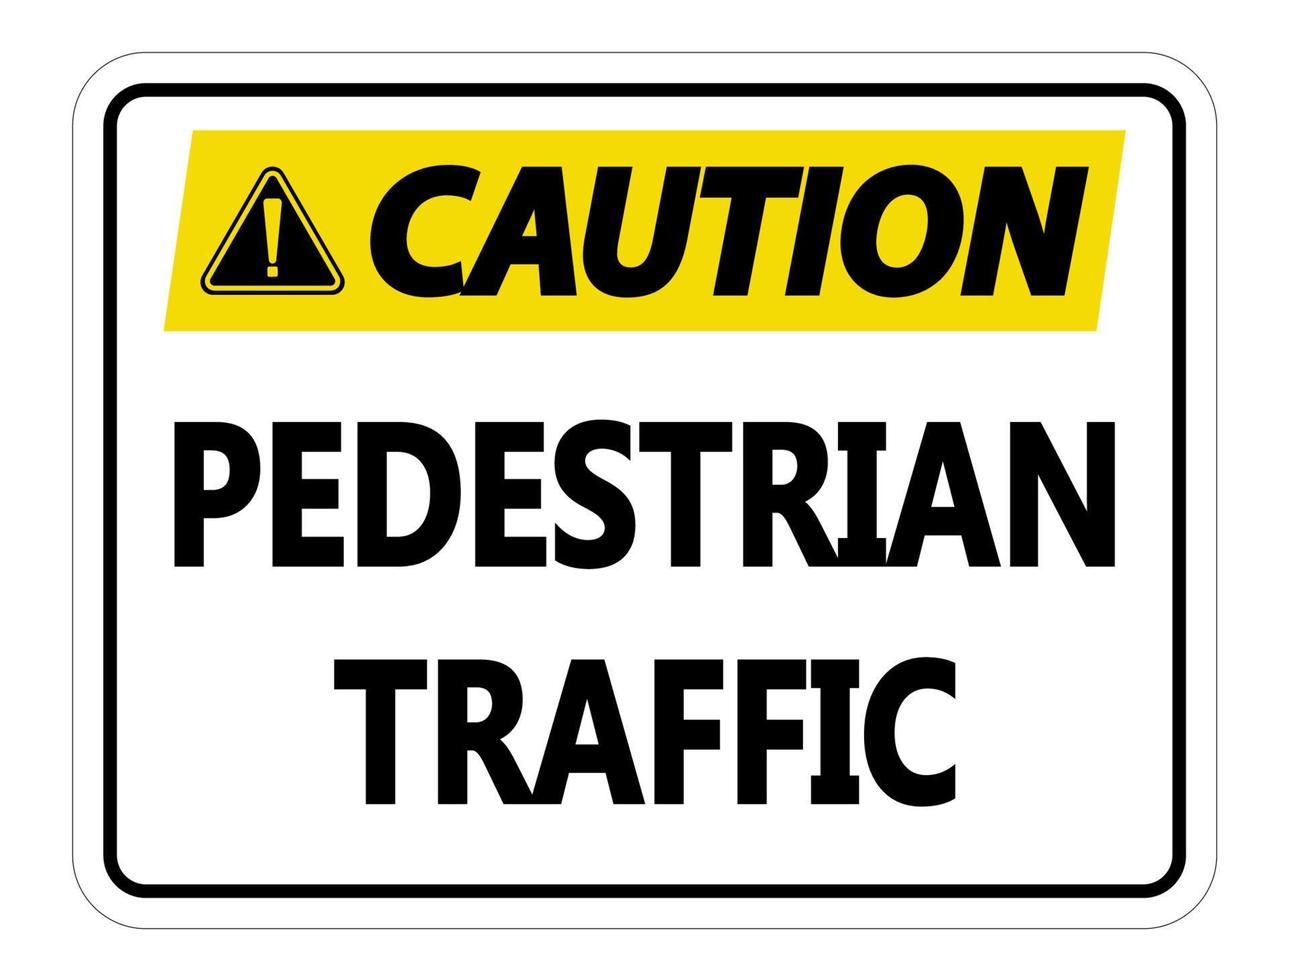 Caution Pedestrian Traffic Sign on white background vector